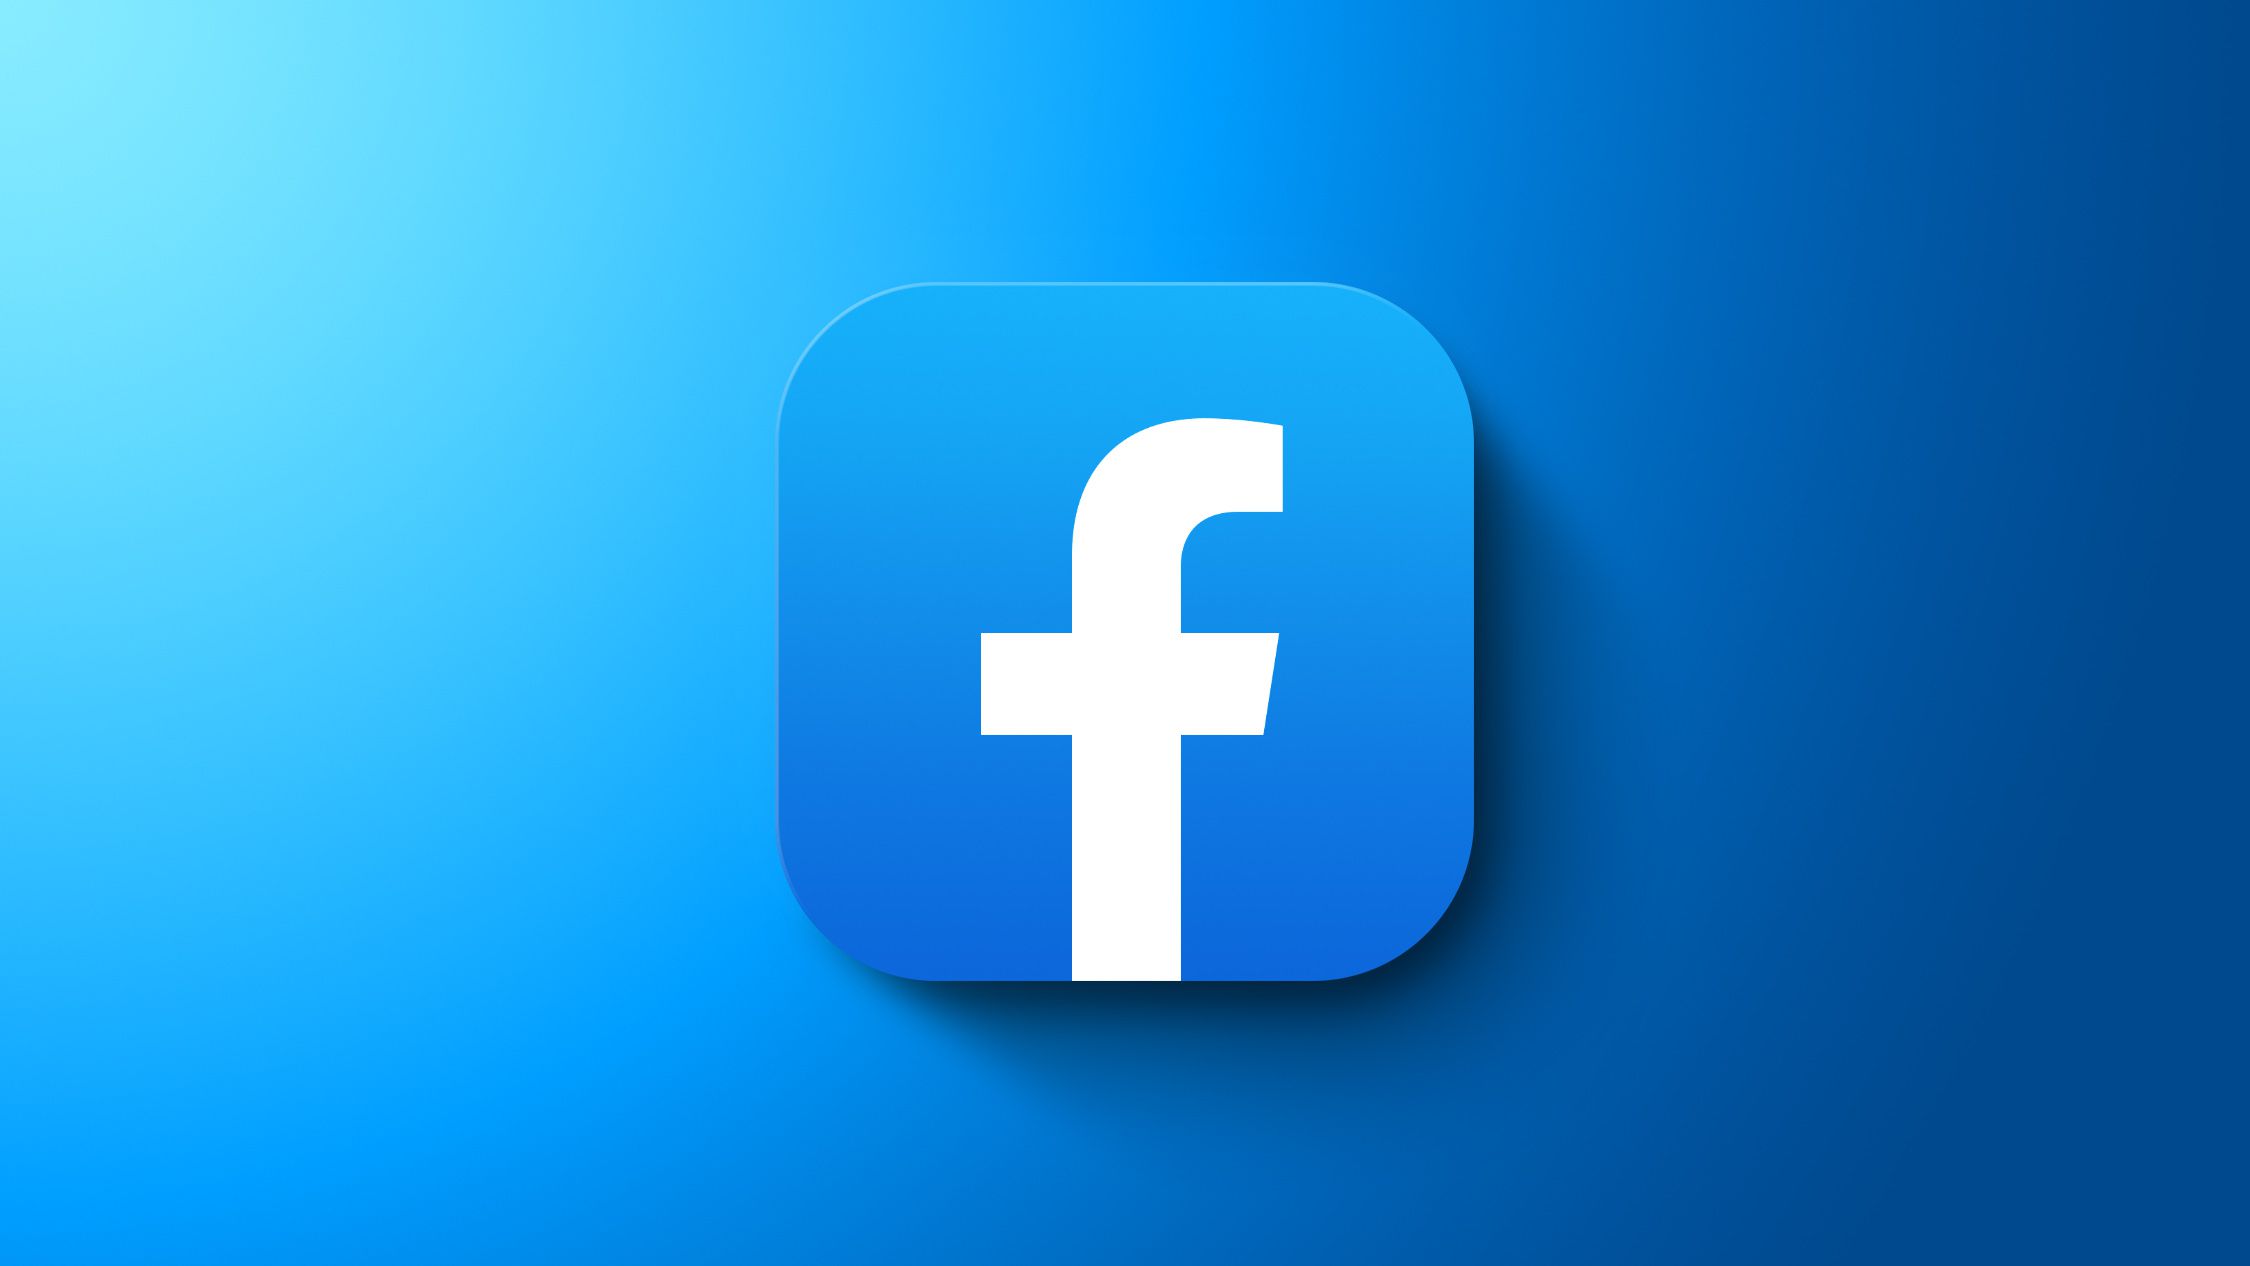 Facebook Reports Record Ad Revenue for Q2 2021, Despite Apple's iOS Privacy Changes